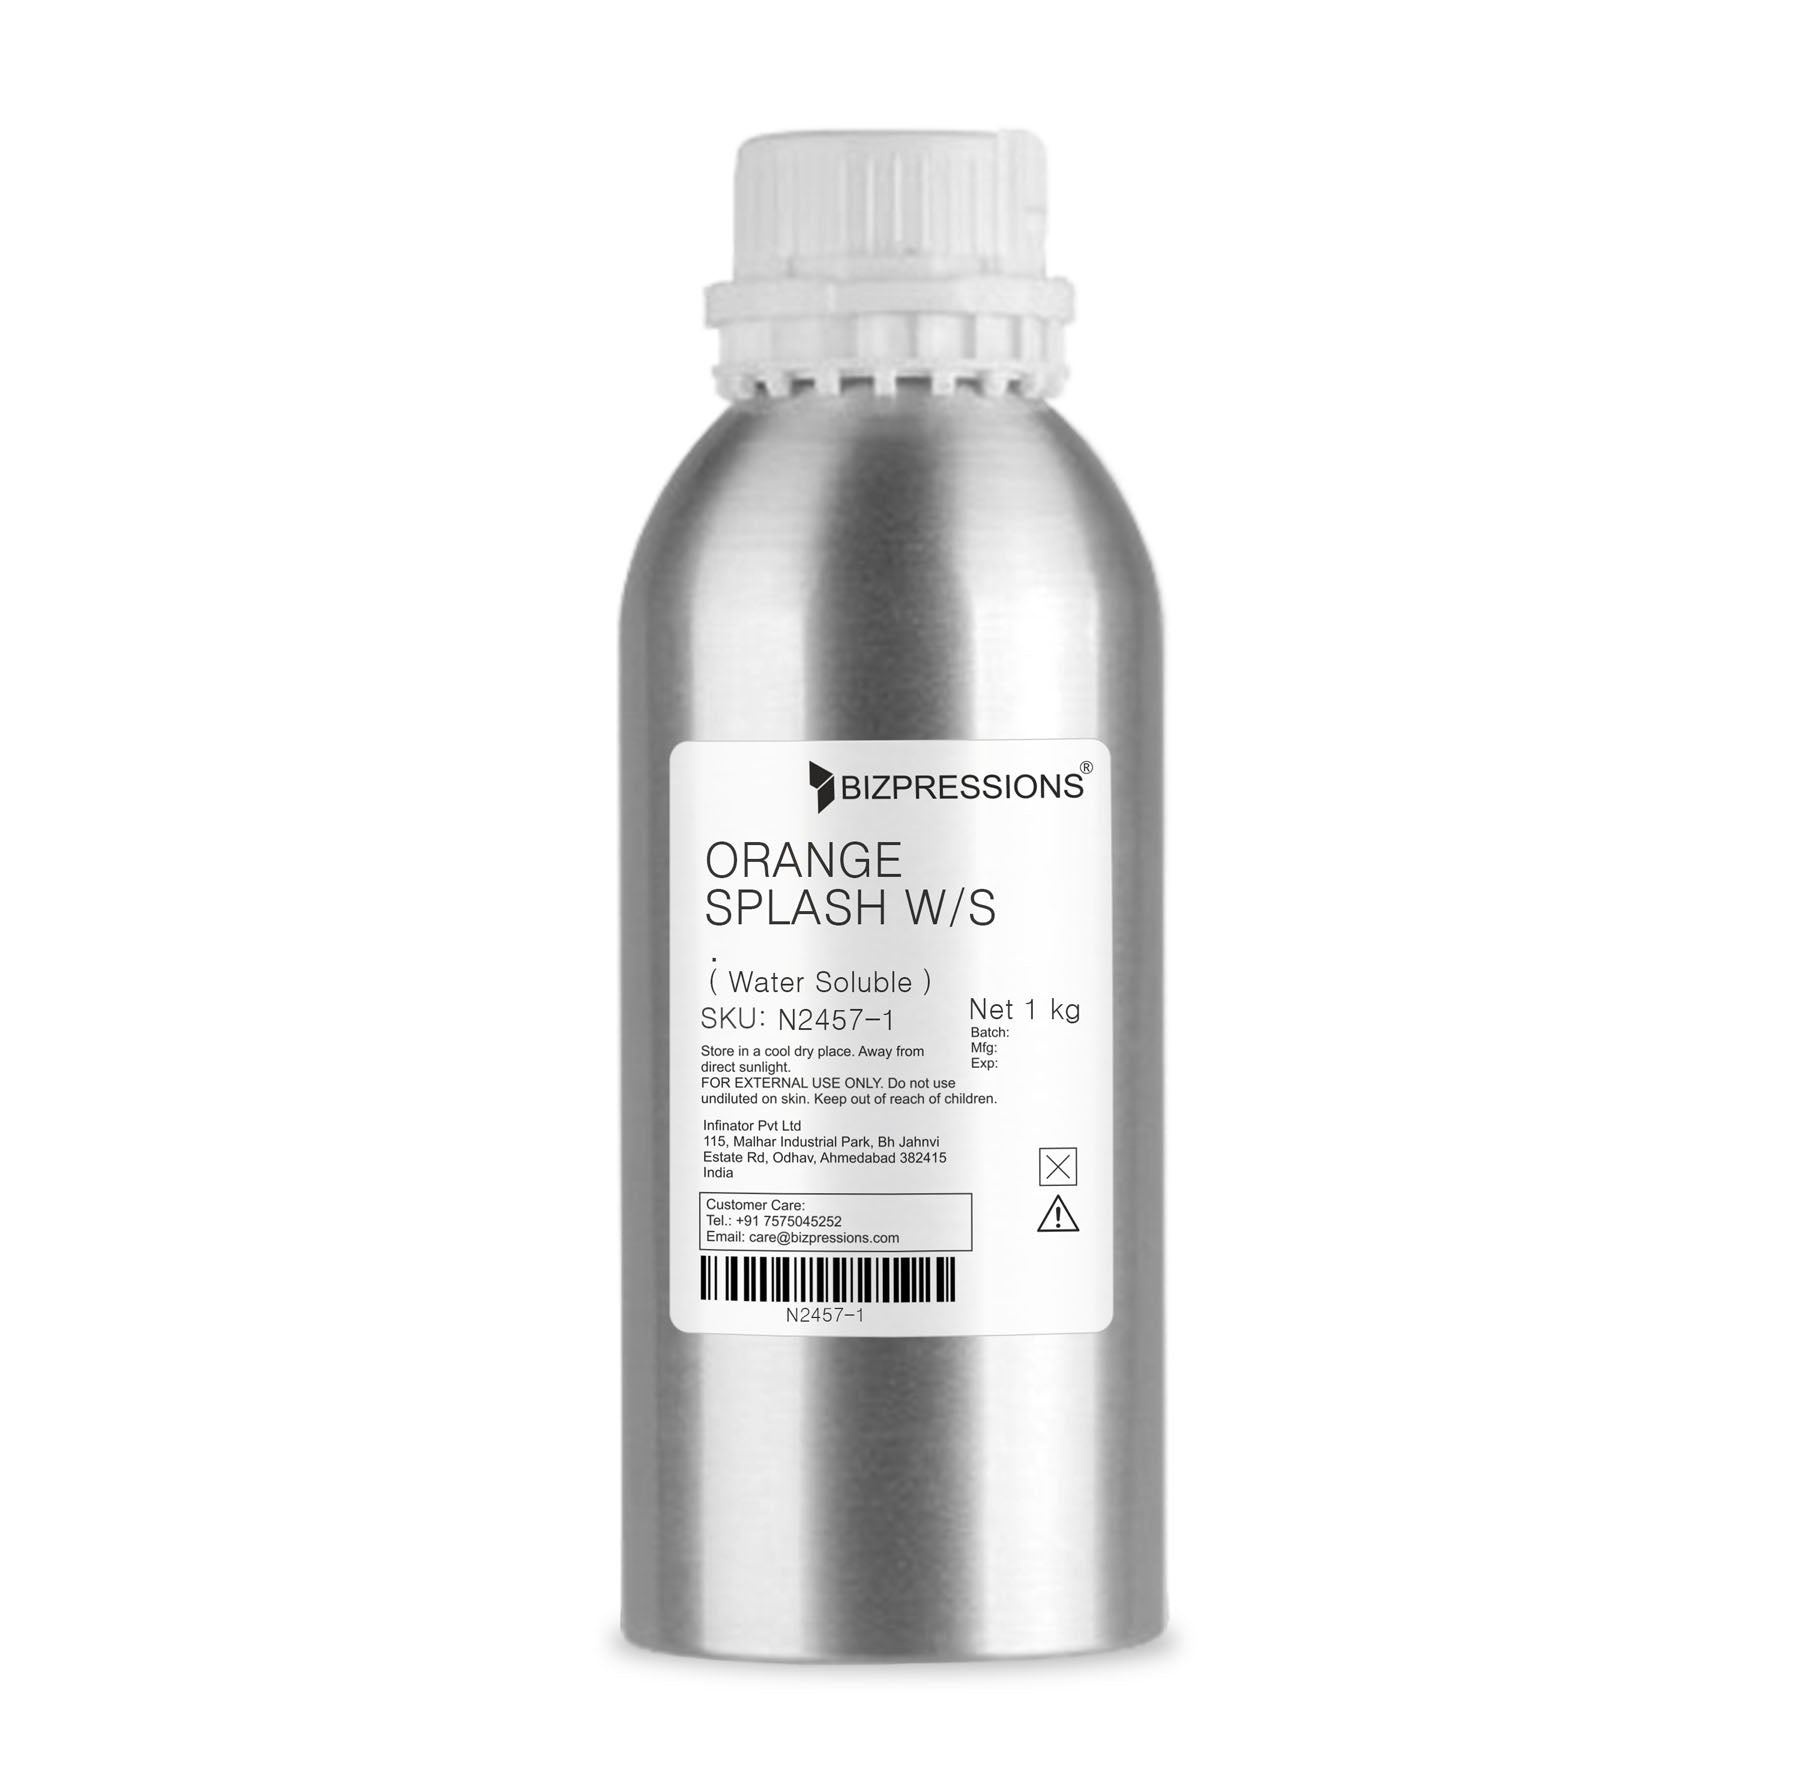 ORANGE SPLASH W/S - Fragrance ( Water Soluble ) - 1 kg